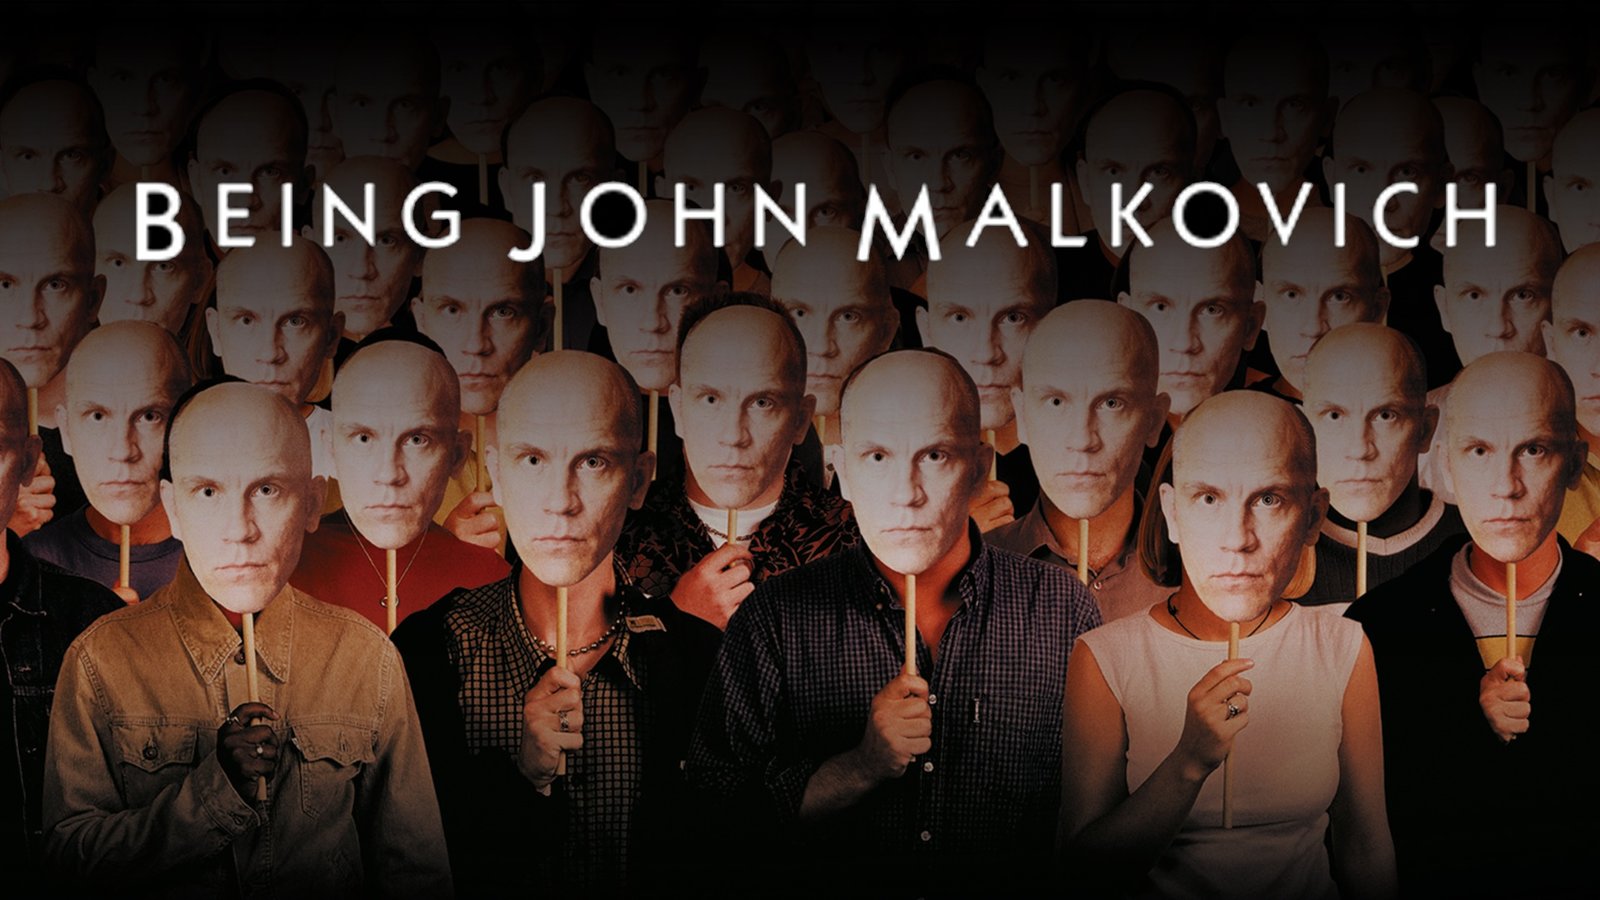 John Malkovich's iconic blonde hair in "Being John Malkovich" - wide 3